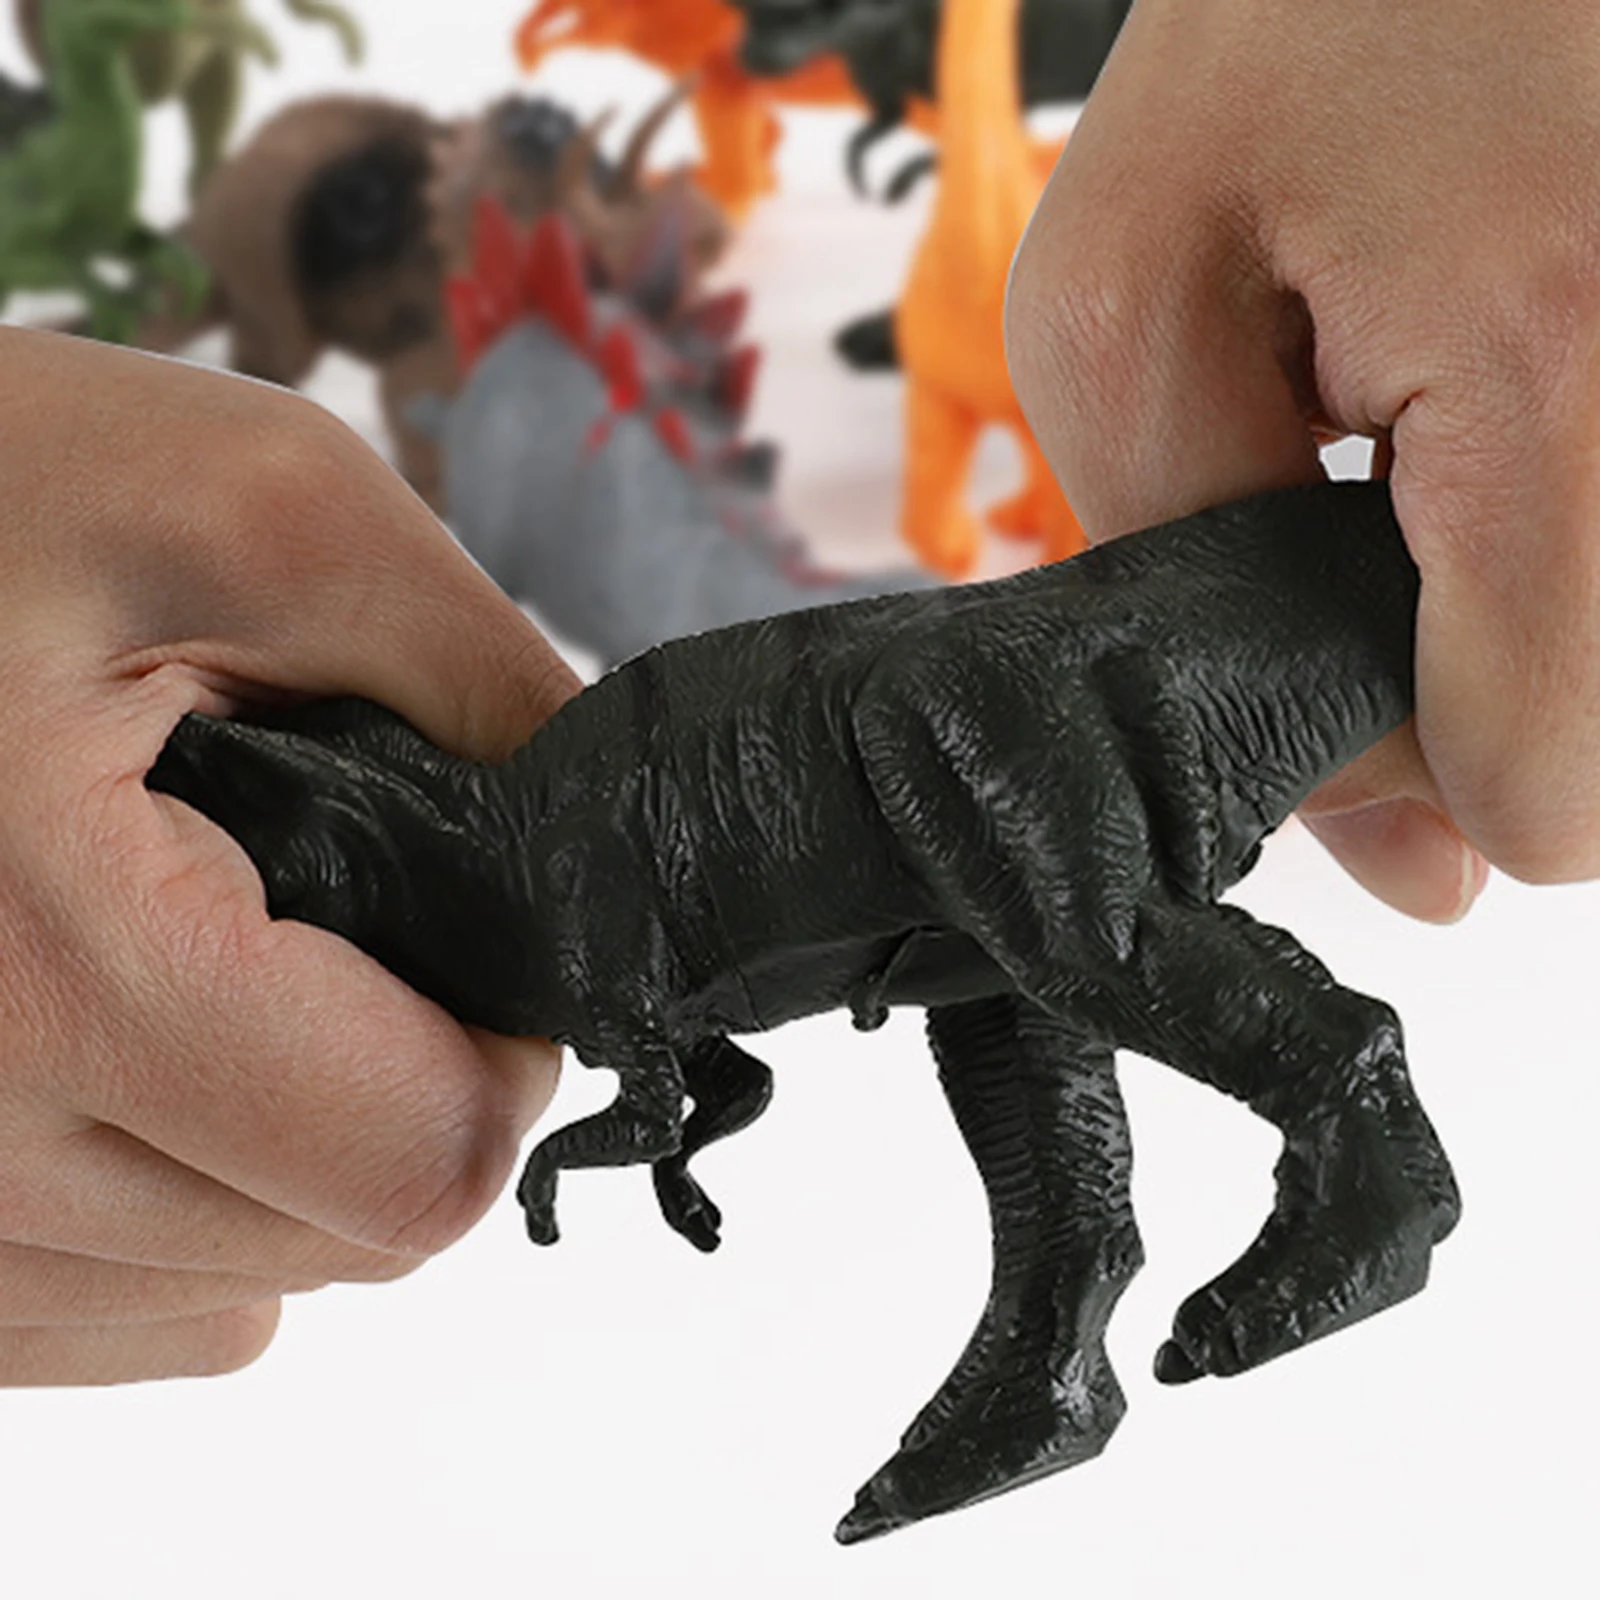 

46pcs Simulation Plastic Dinosaur Model Toy Set Dinosaur Kingdom Animal Figures Develop Imagination Birthday Present for Boy